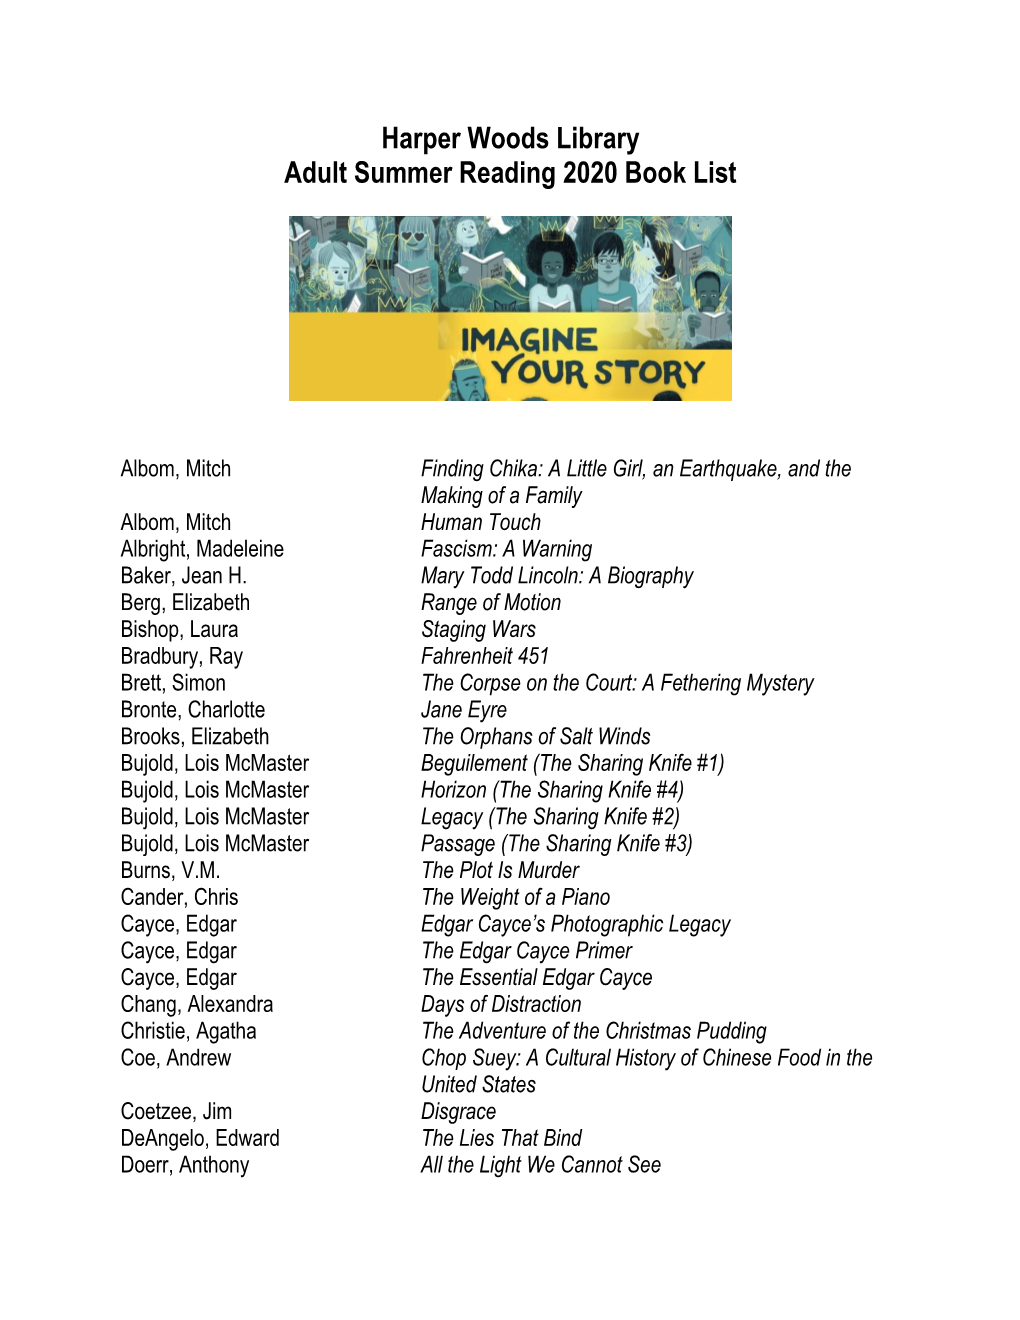 Adult Summer Reading Book List